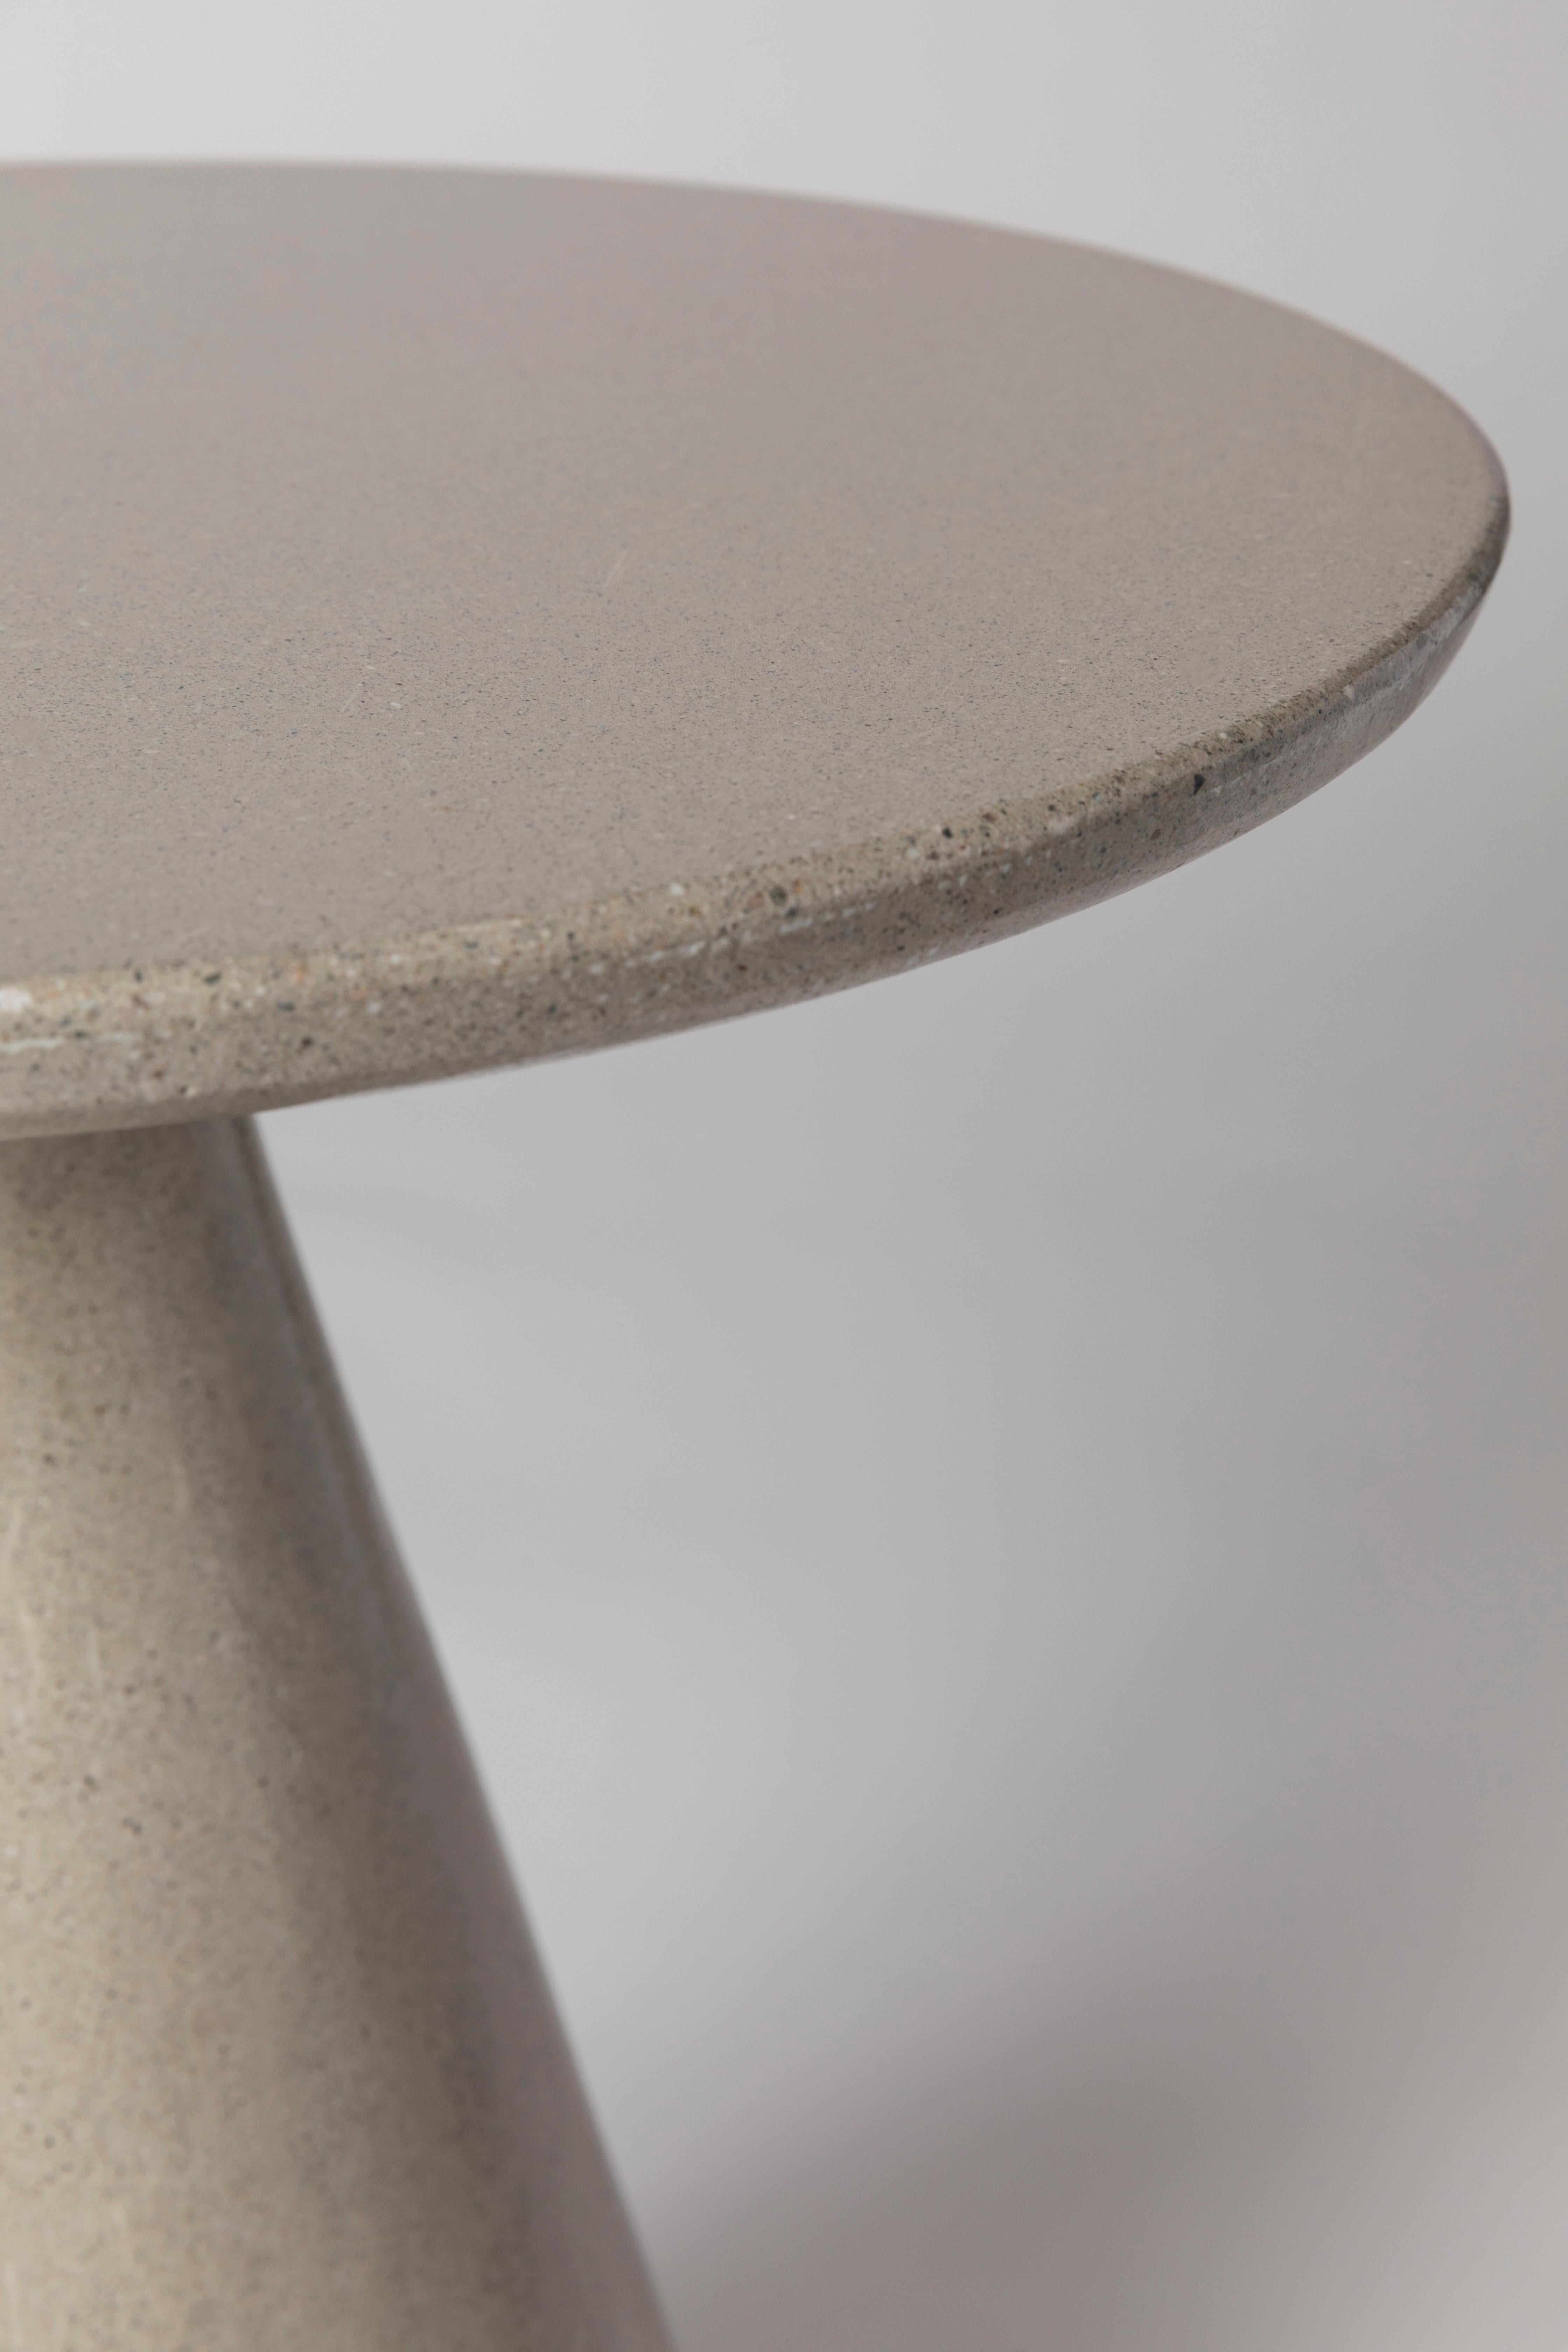 Polished James de Wulf Concrete Round Side Table